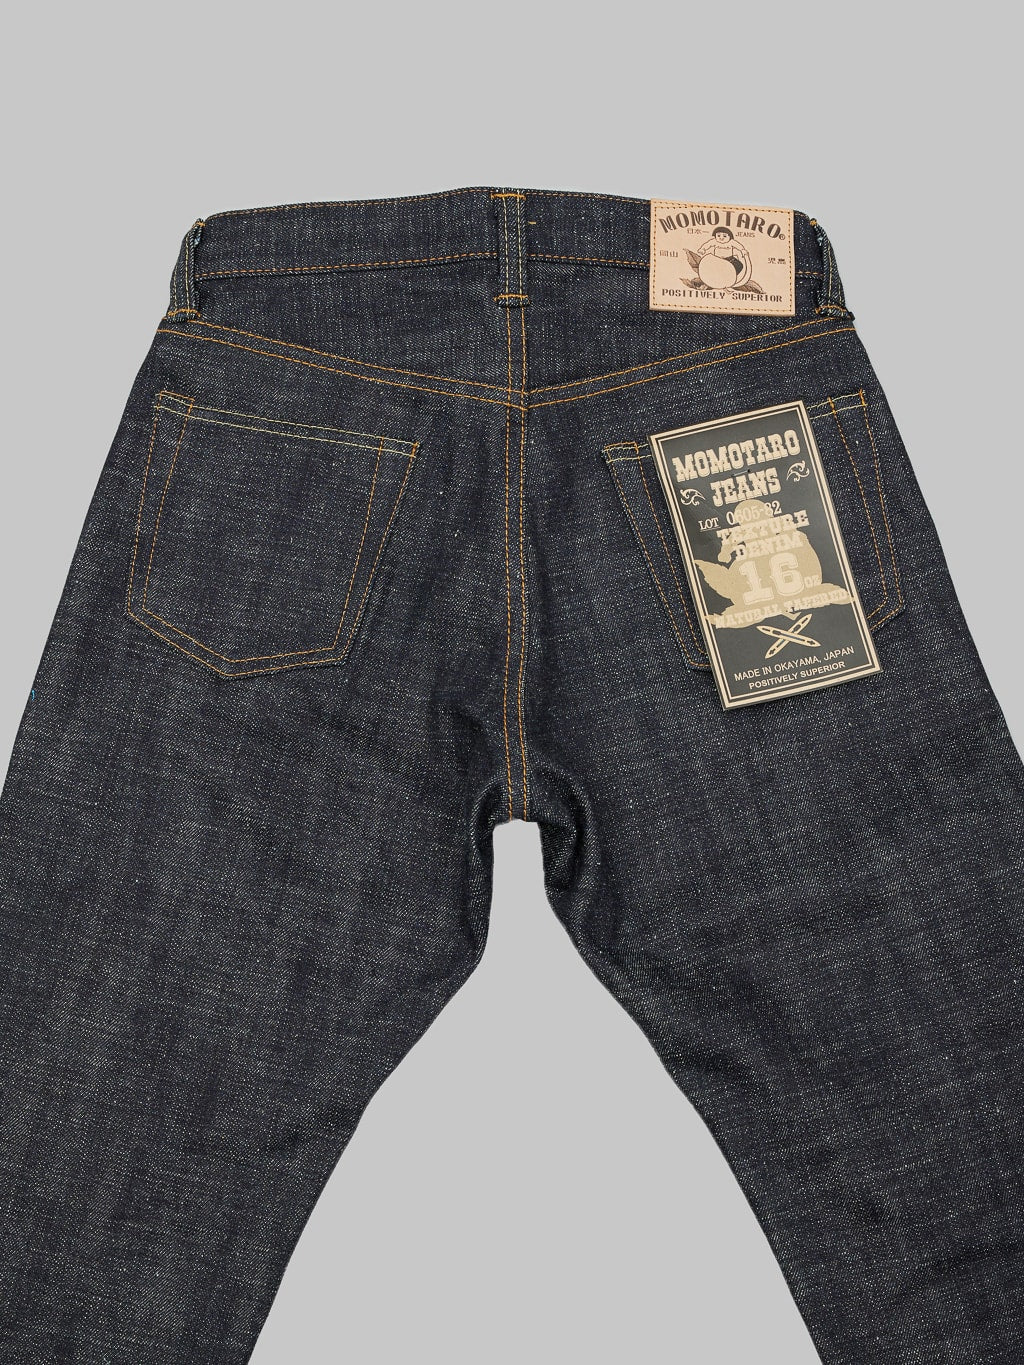 momotaro jeans 0605 82 16oz texture denim natural tapered back pockets